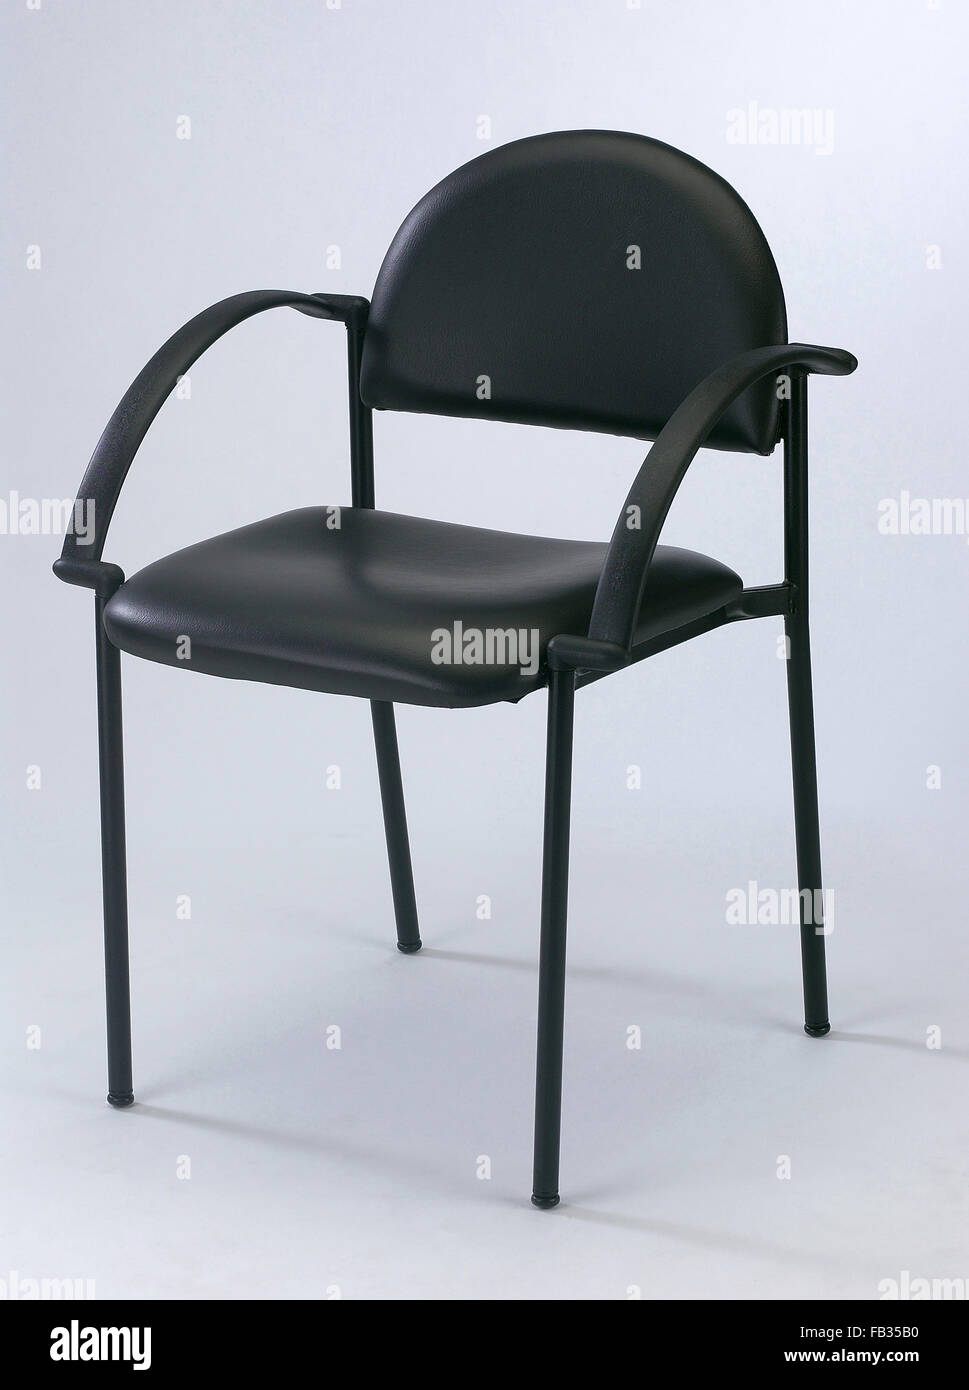 Bild des Stuhls Plainn Hintergrund Stockfoto